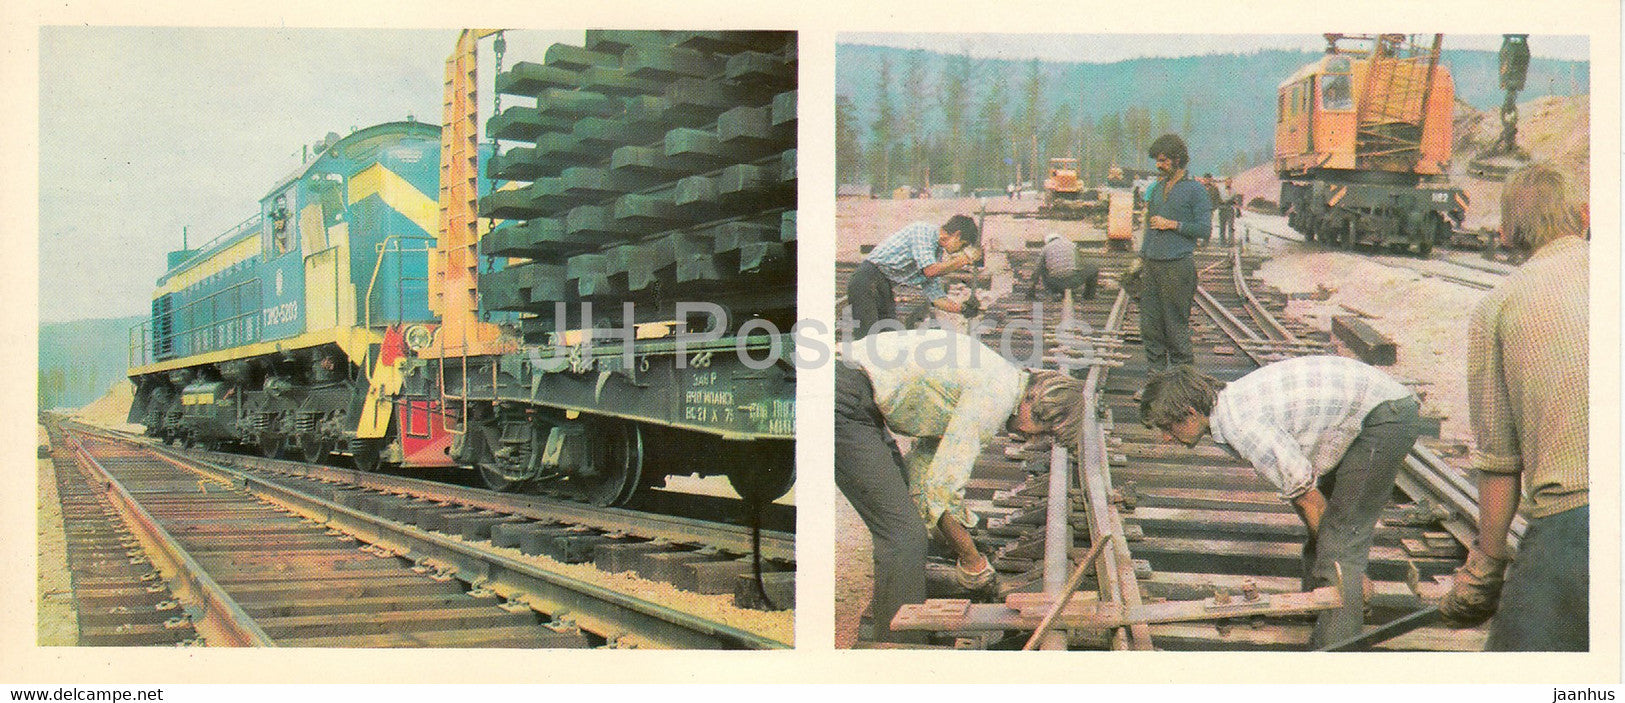 locomotive - 1 - BAM - Baikal-Amur Mainline , construction of the railway - 1978 - Russia USSR - unused - JH Postcards